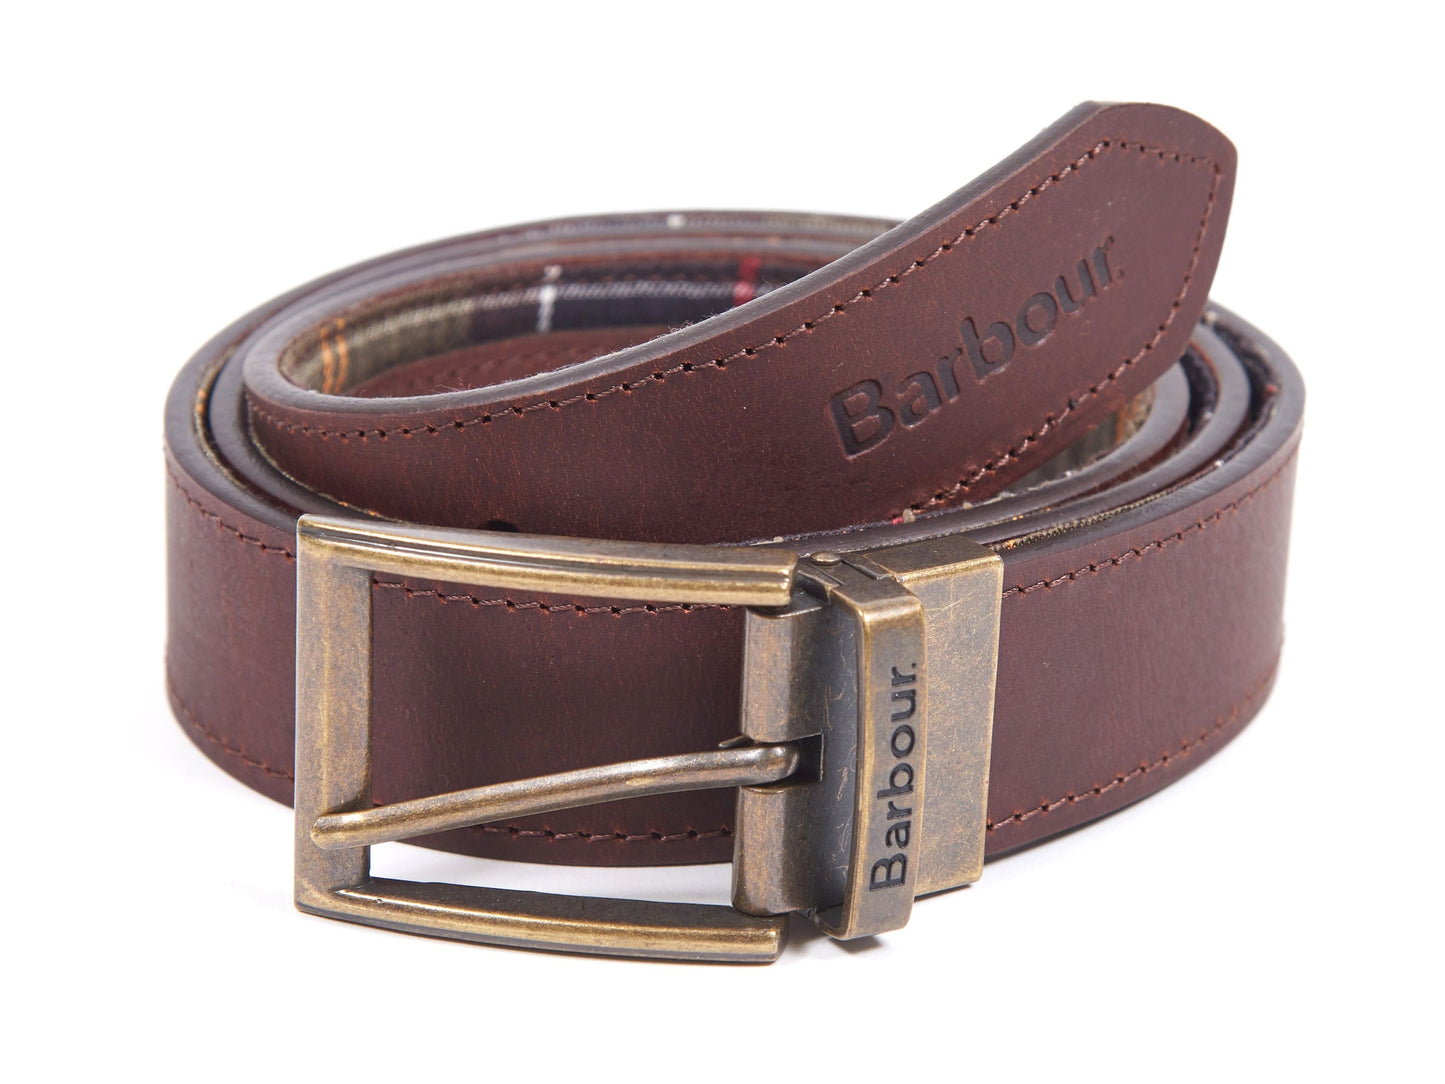 Barbour MAC0364 TN11 Reversible Tartan Leather Belt